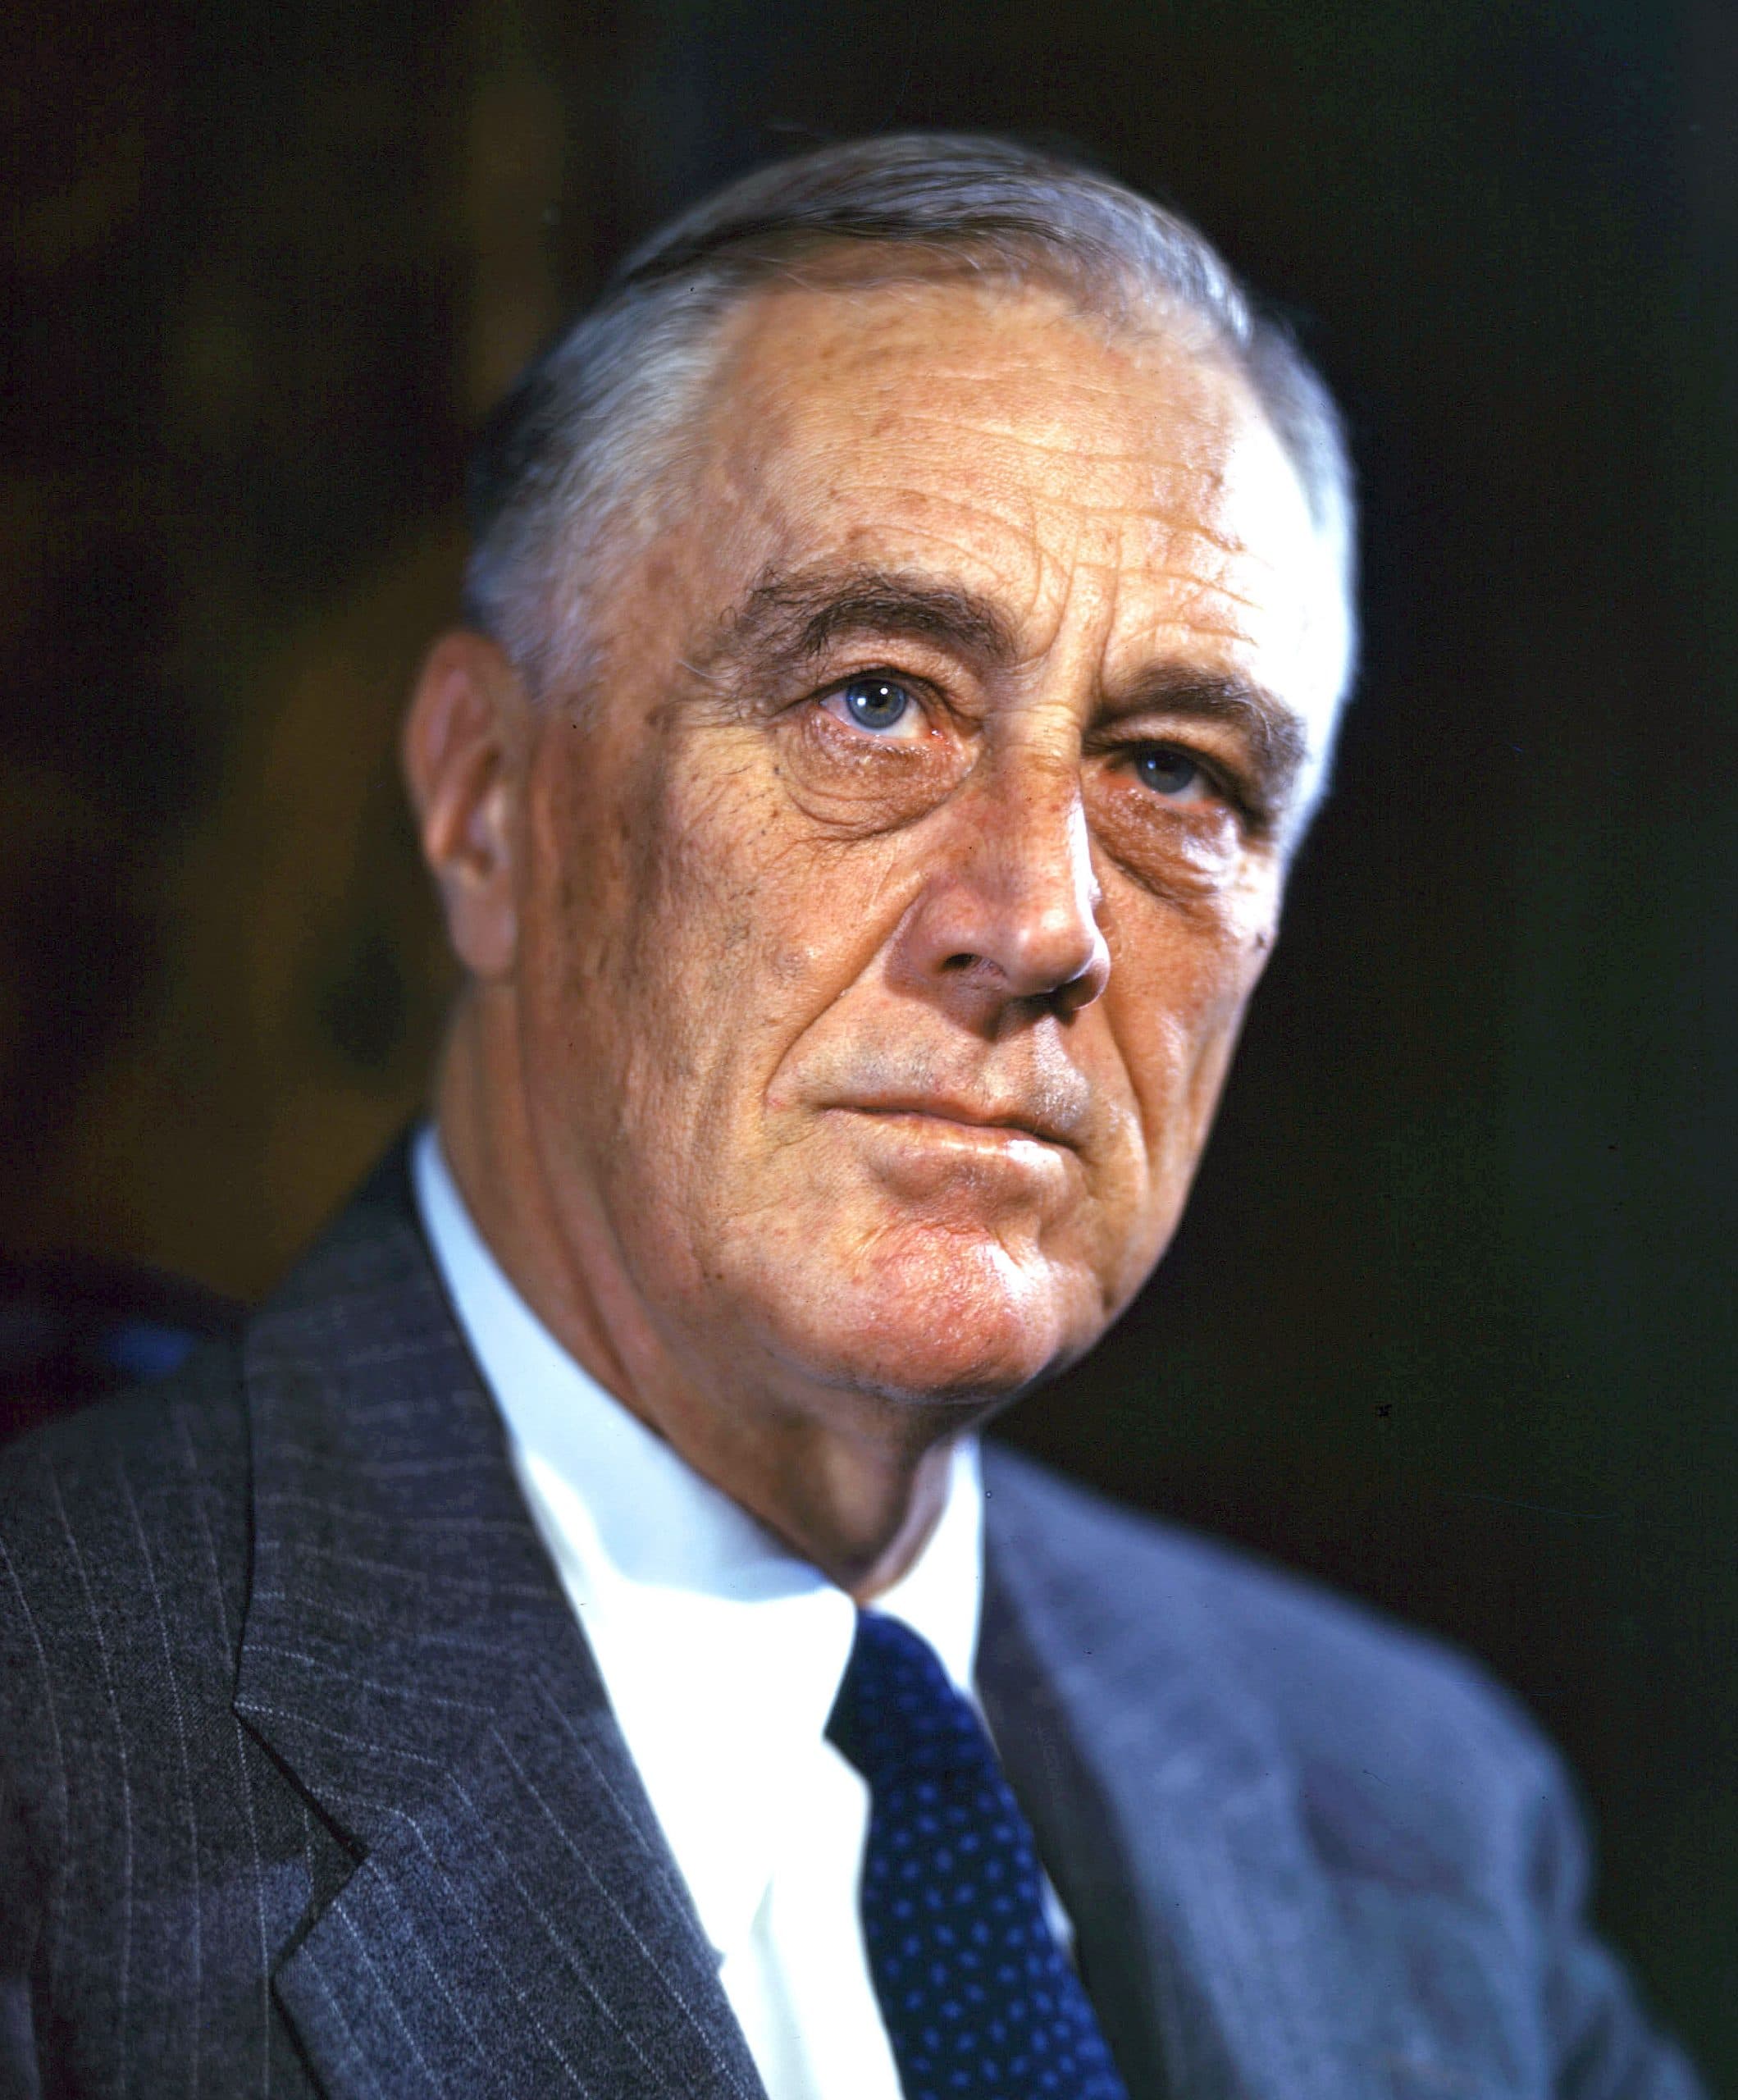 Historical photo of President Franklin D. Roosevelt.